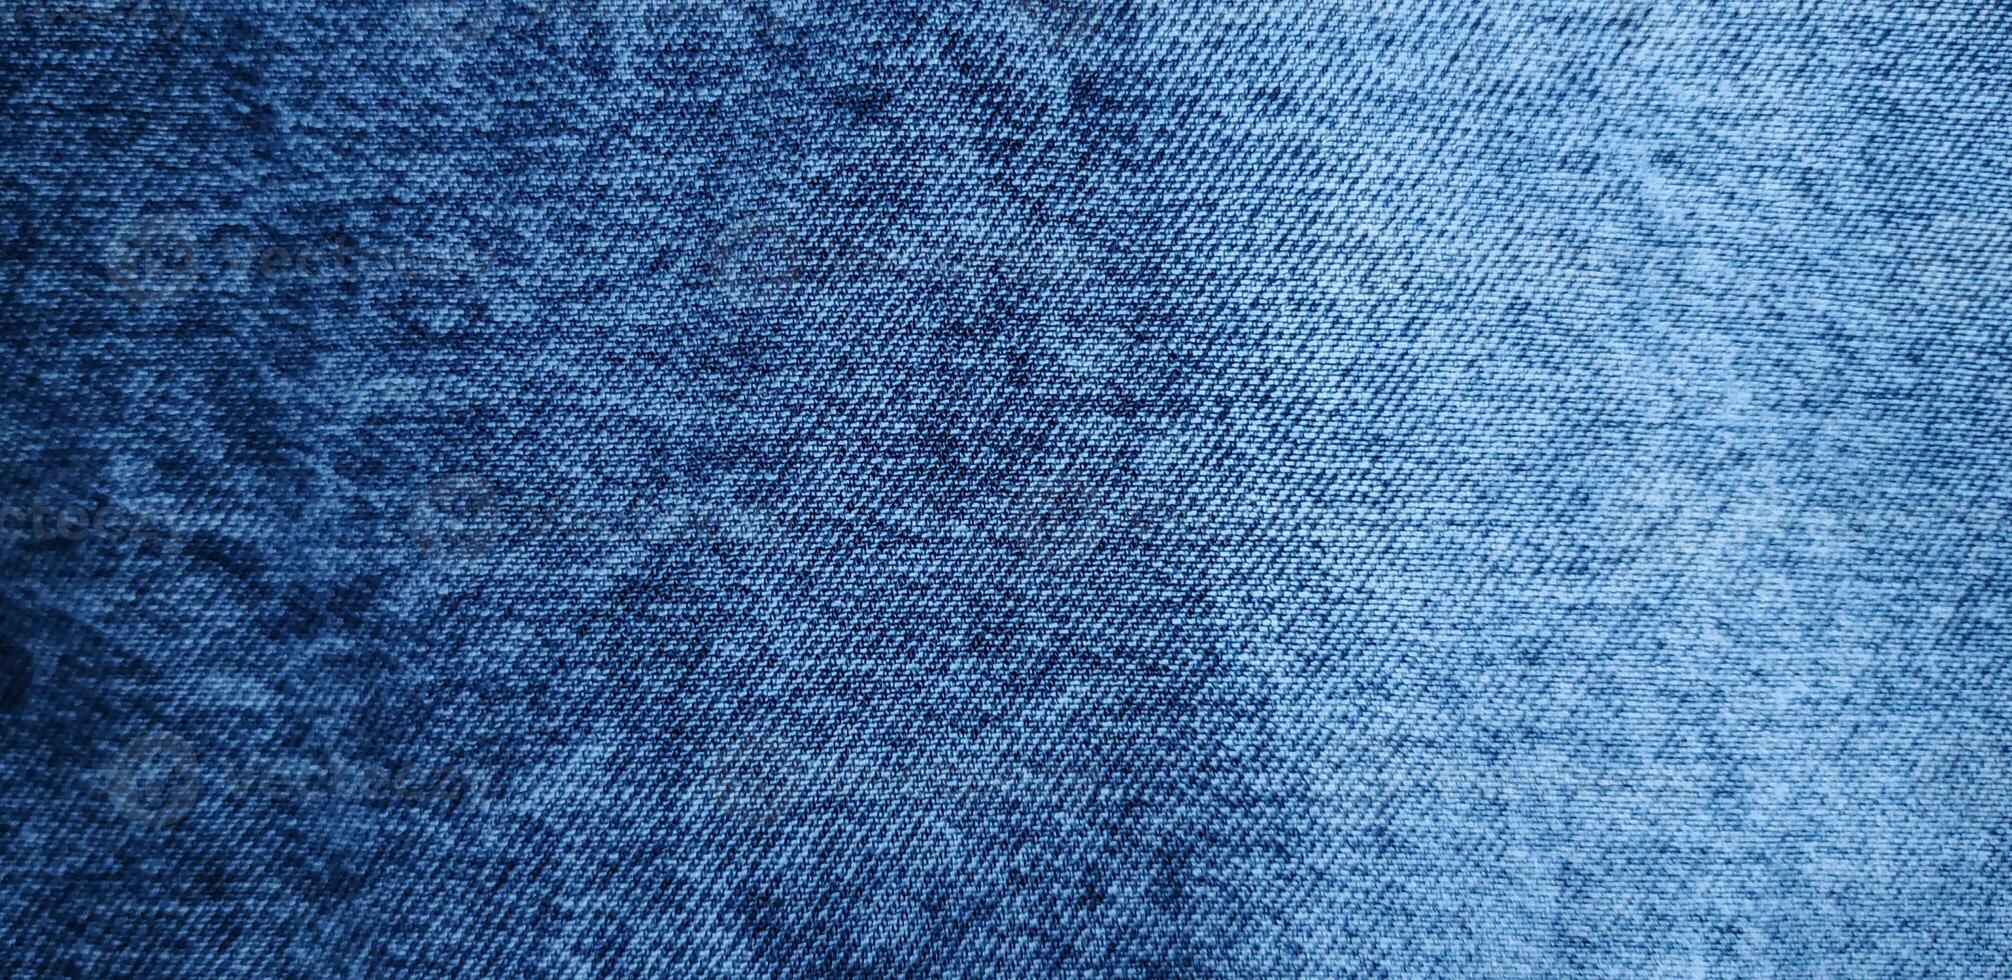 jean, denim, fabric, denim fabric close up photography, Indigo Blue denim fabric close up photography background, denim jeans cloth, denim texture, photo